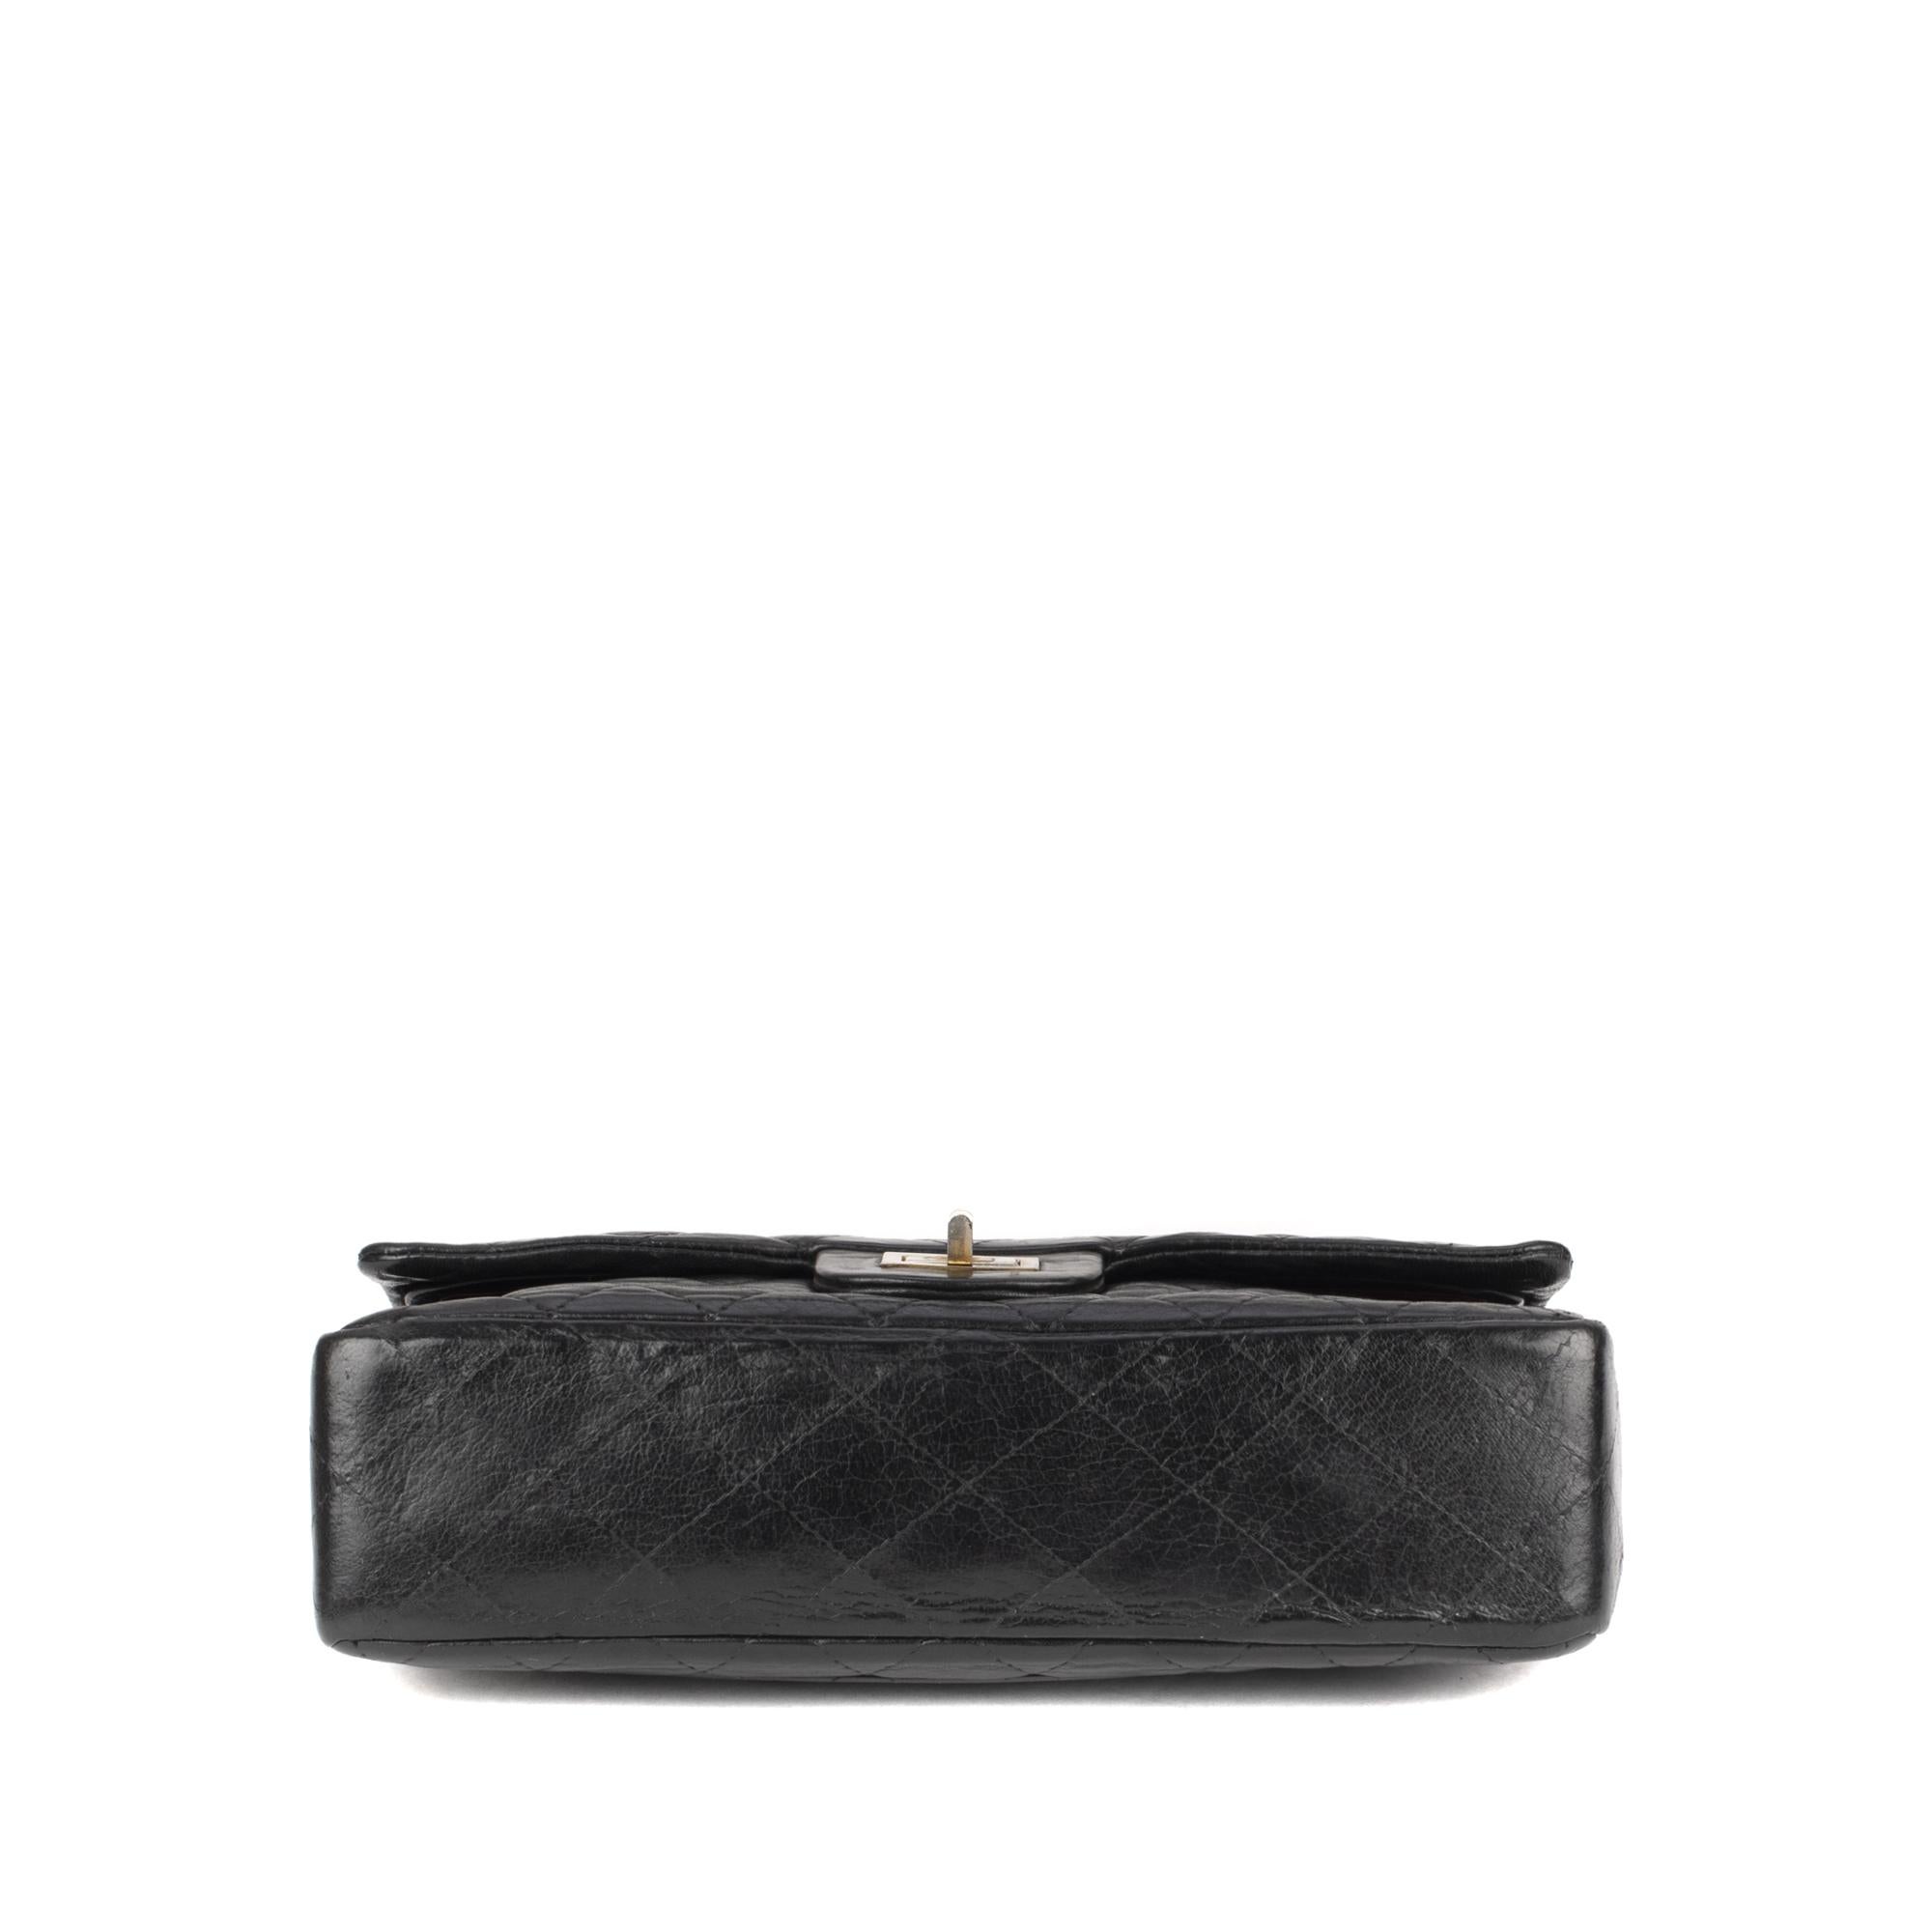 Handbag Chanel 2.55 in Black lambskin Leather ! 1